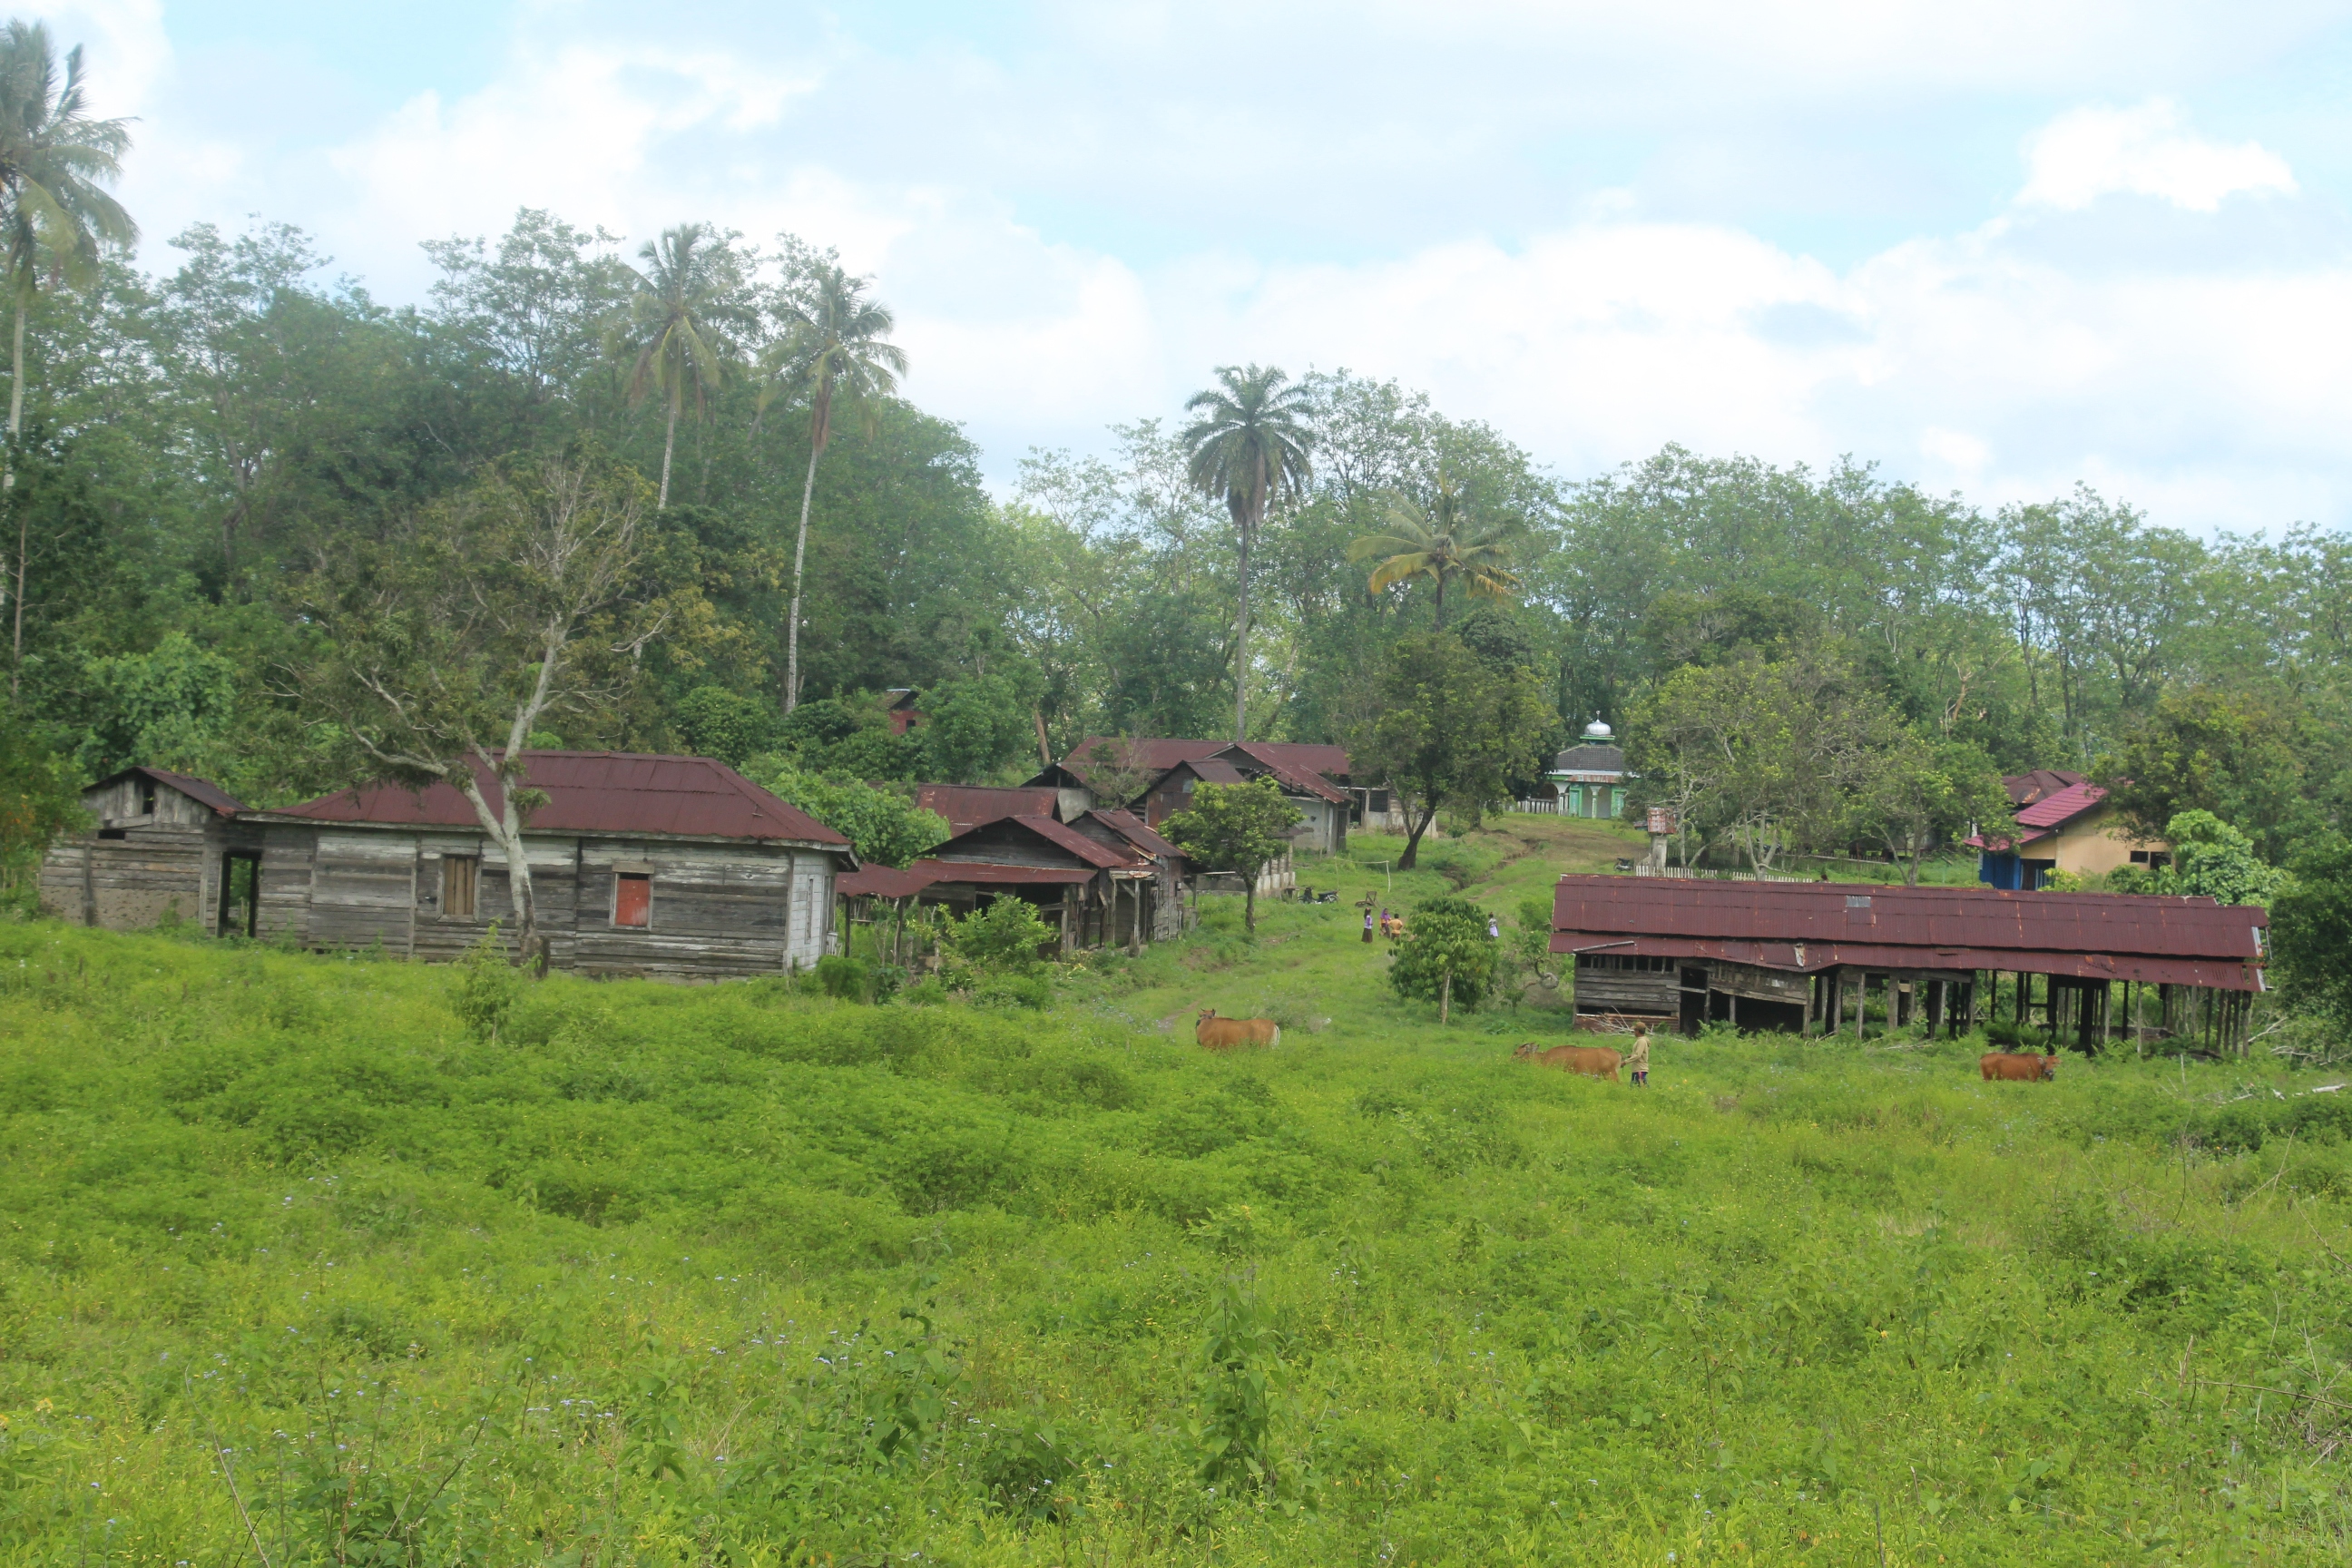 Basecamp bekas perkebunan kopi di Tambora. Di kawasan ini juga masih ada izin penebangan kayu. Perlu memerhatikan penduduk yang tinggal di sekitar kawasan agar tidak terjadi konfik yang mengancam kelestarian | Foto: Fathul Rakhman/ Mongabay Indonesia